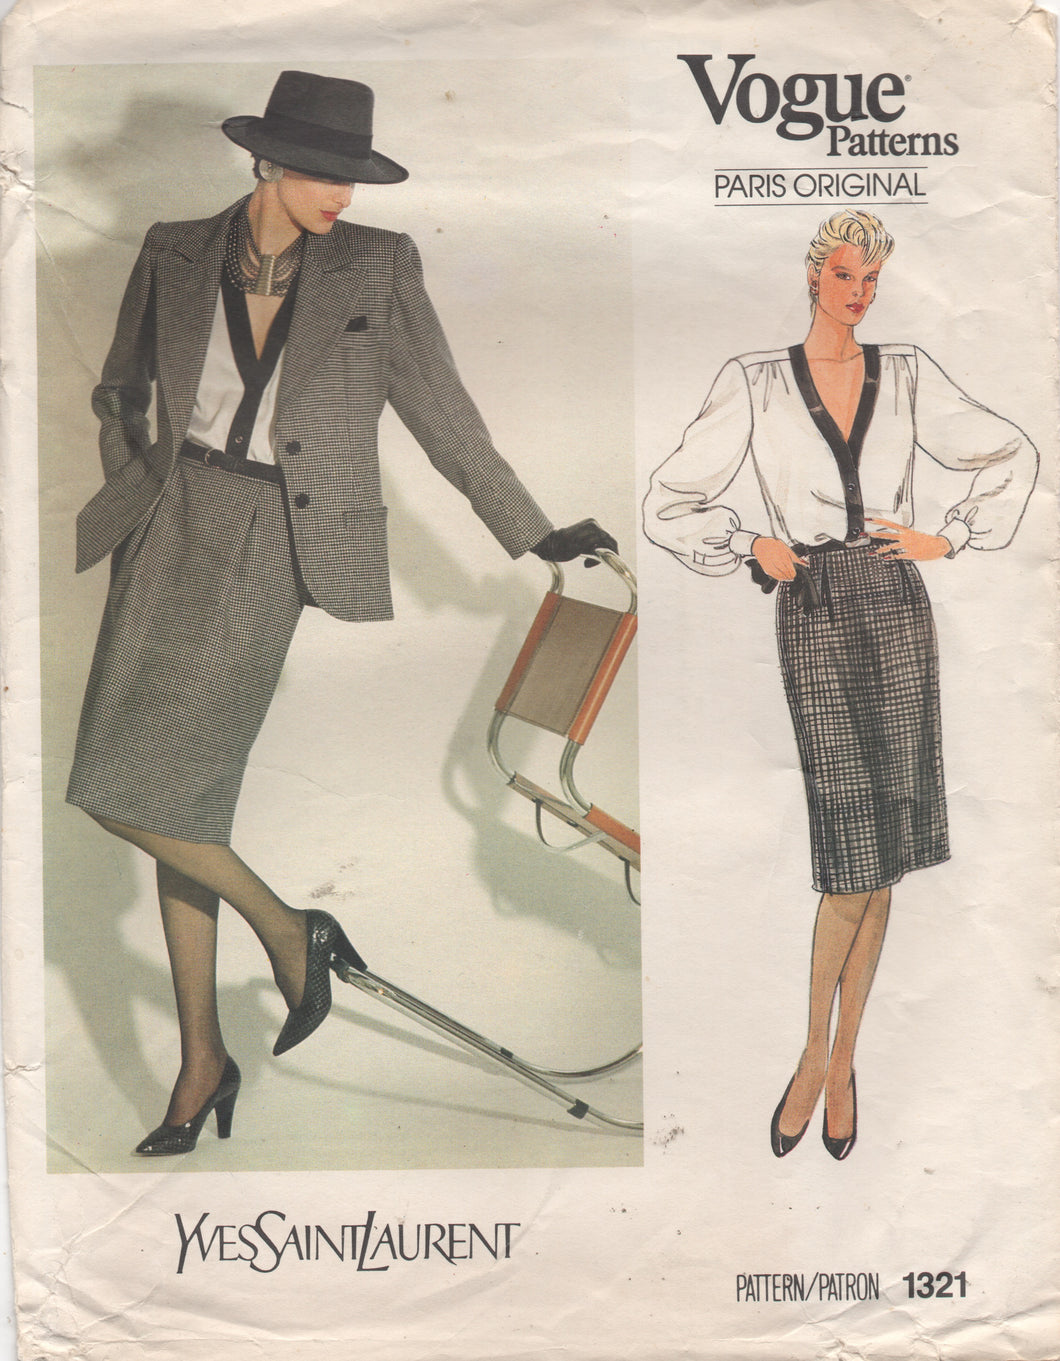 1980's Vogue Paris Original Button up Blouse with Deep V, Jacket and Pencil Skirt Pattern - Yves Saint Laurent - Bust 34